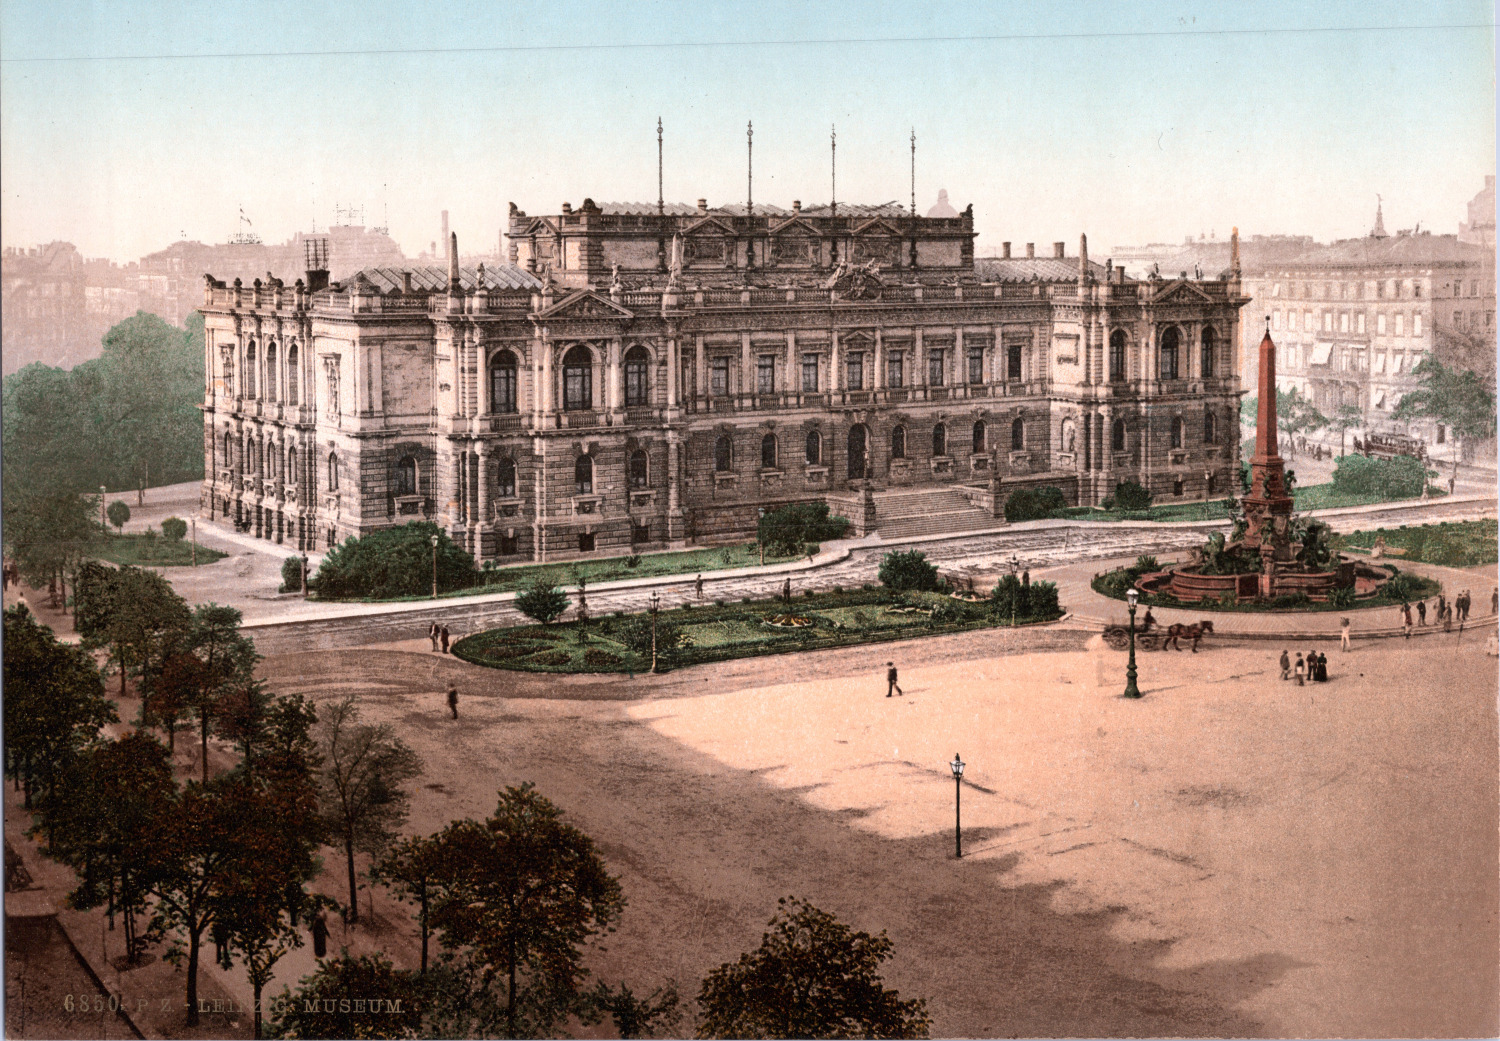 Germany, Leipzig. Augustus Square with Museum. vintage print photochrome, vi